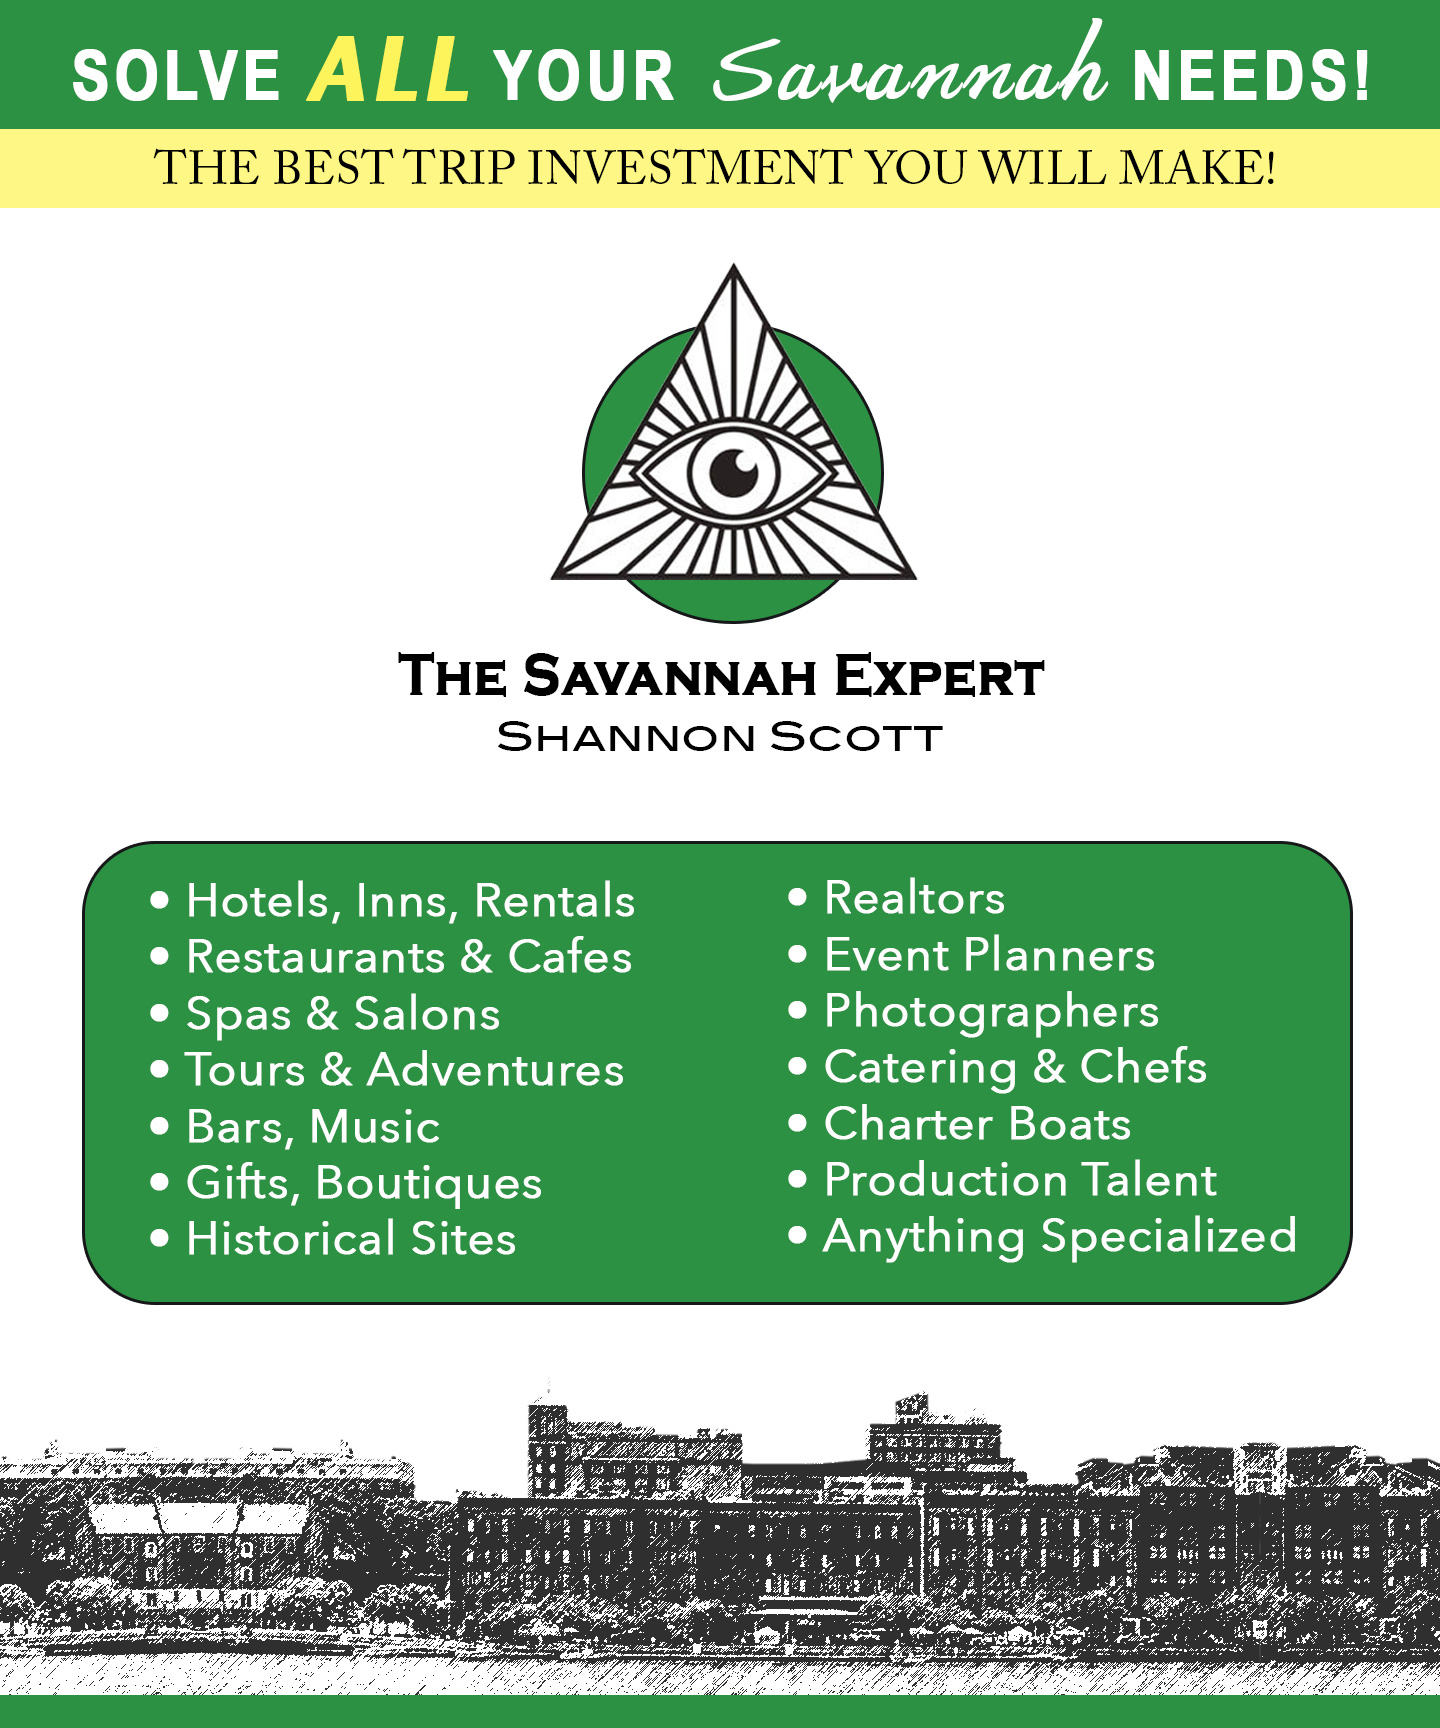 Ask the Savannah Expert!